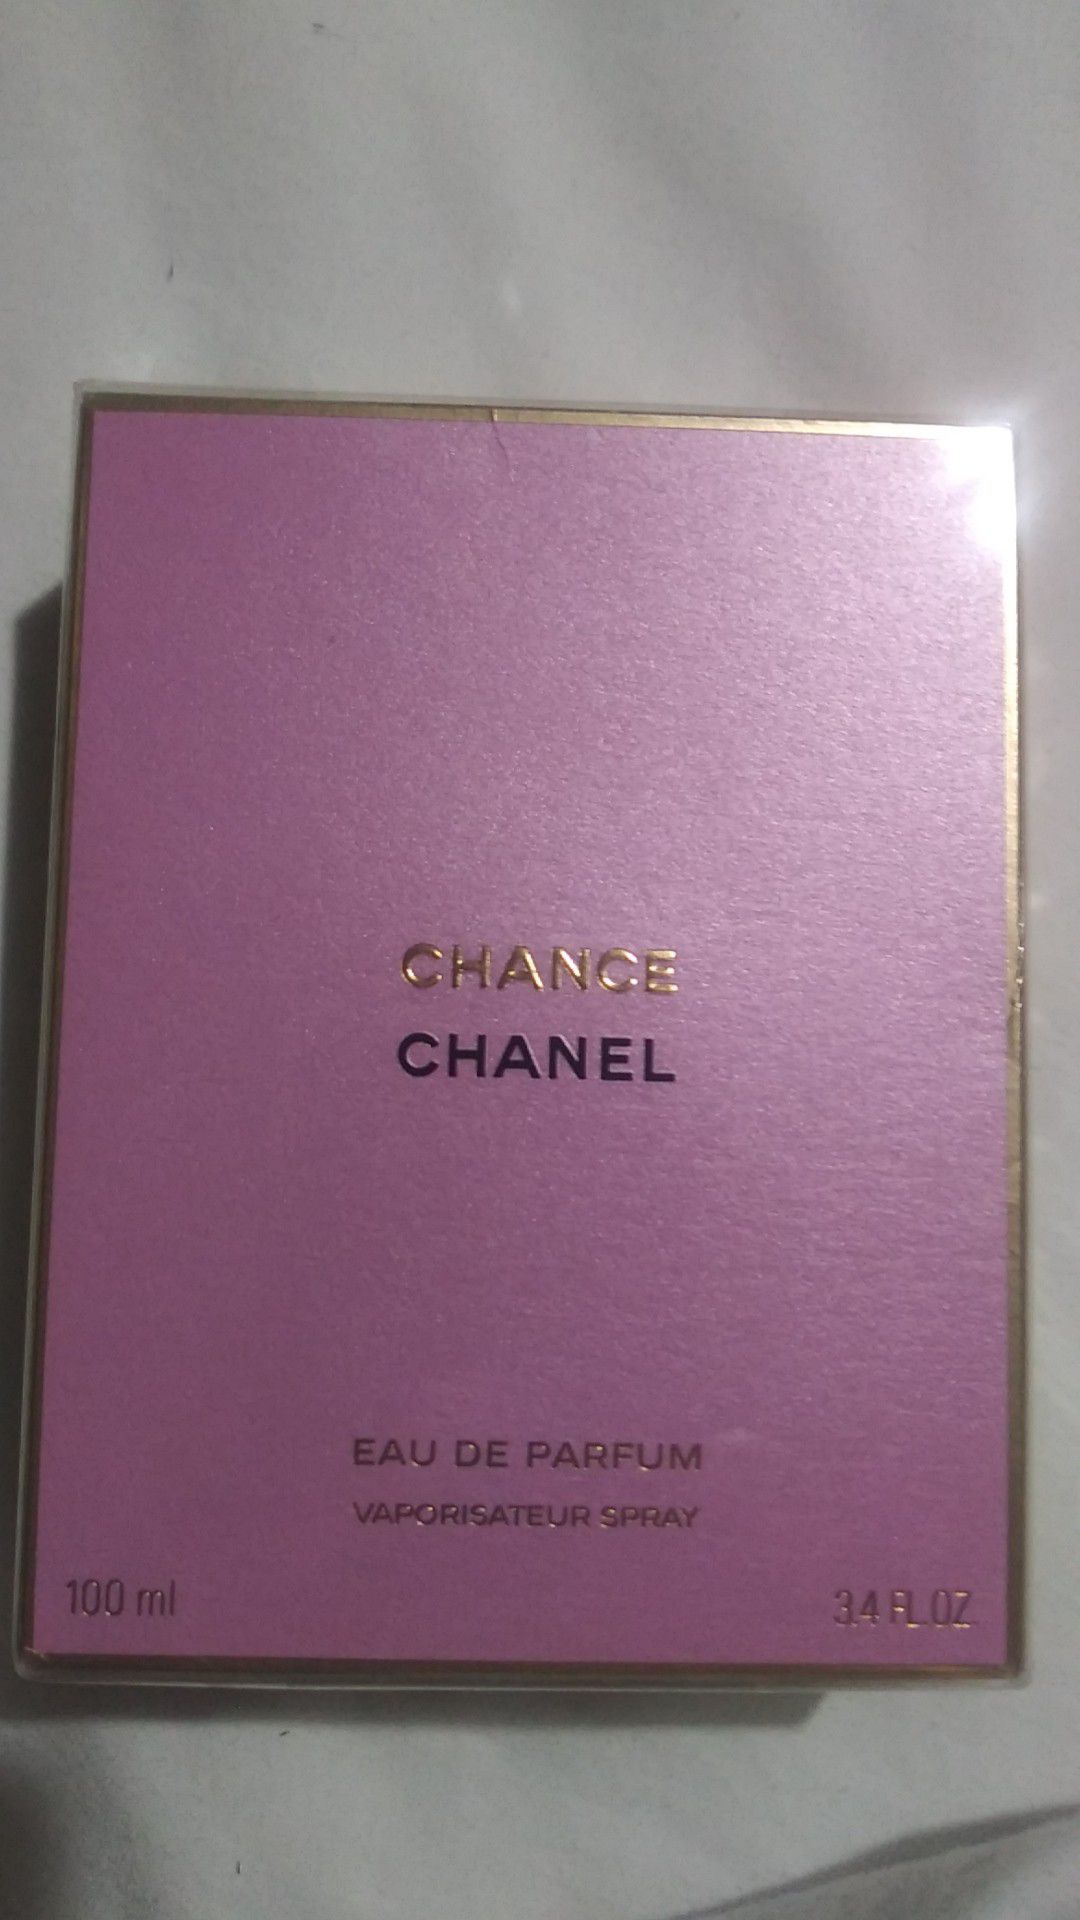 Chanel chance 3.4 perfume